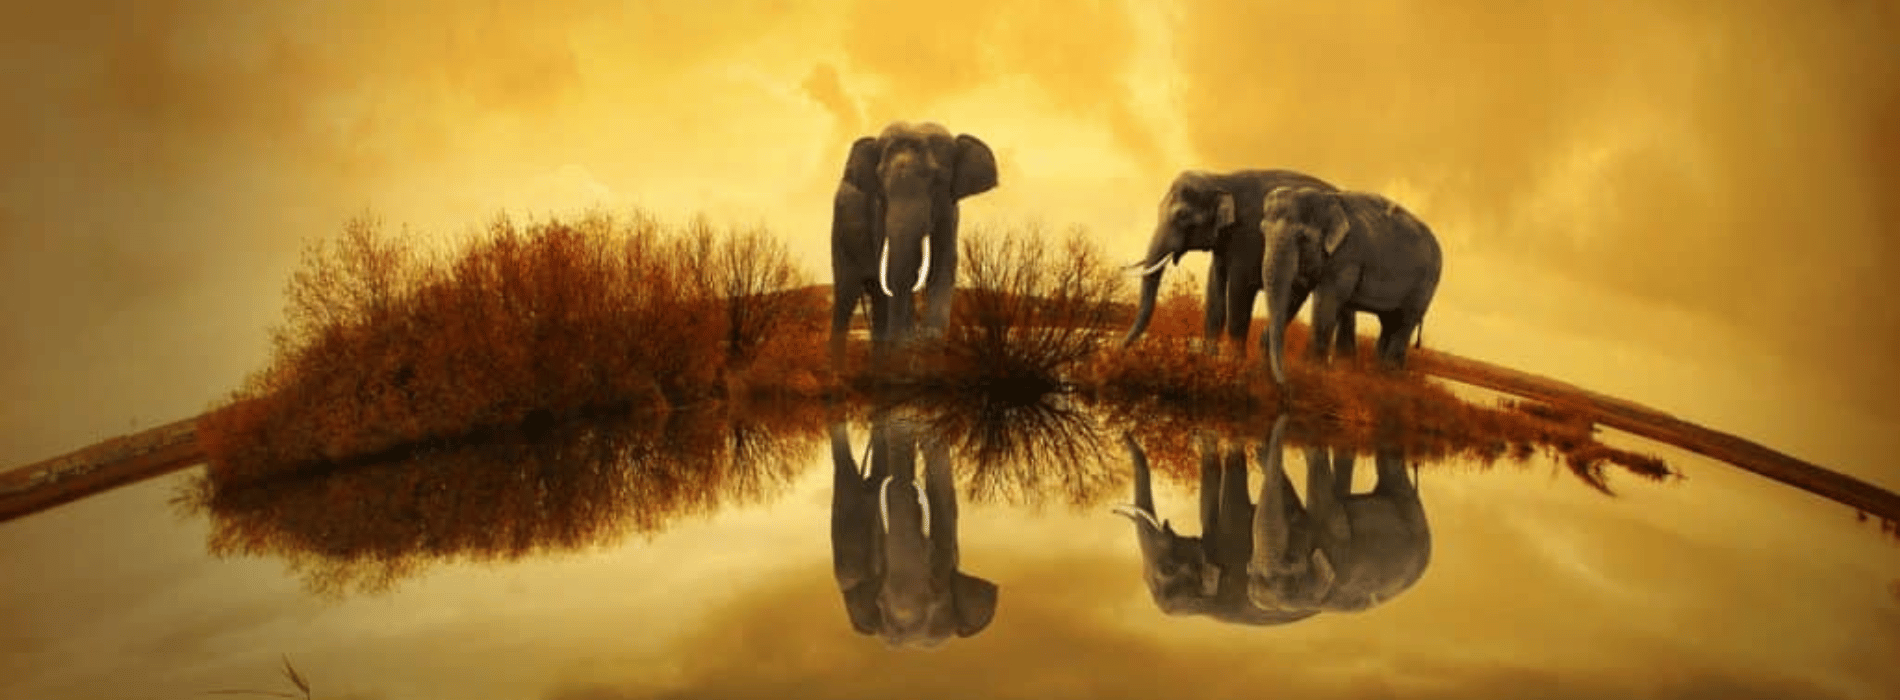 Spirituelle Bedeutung des Elefanten